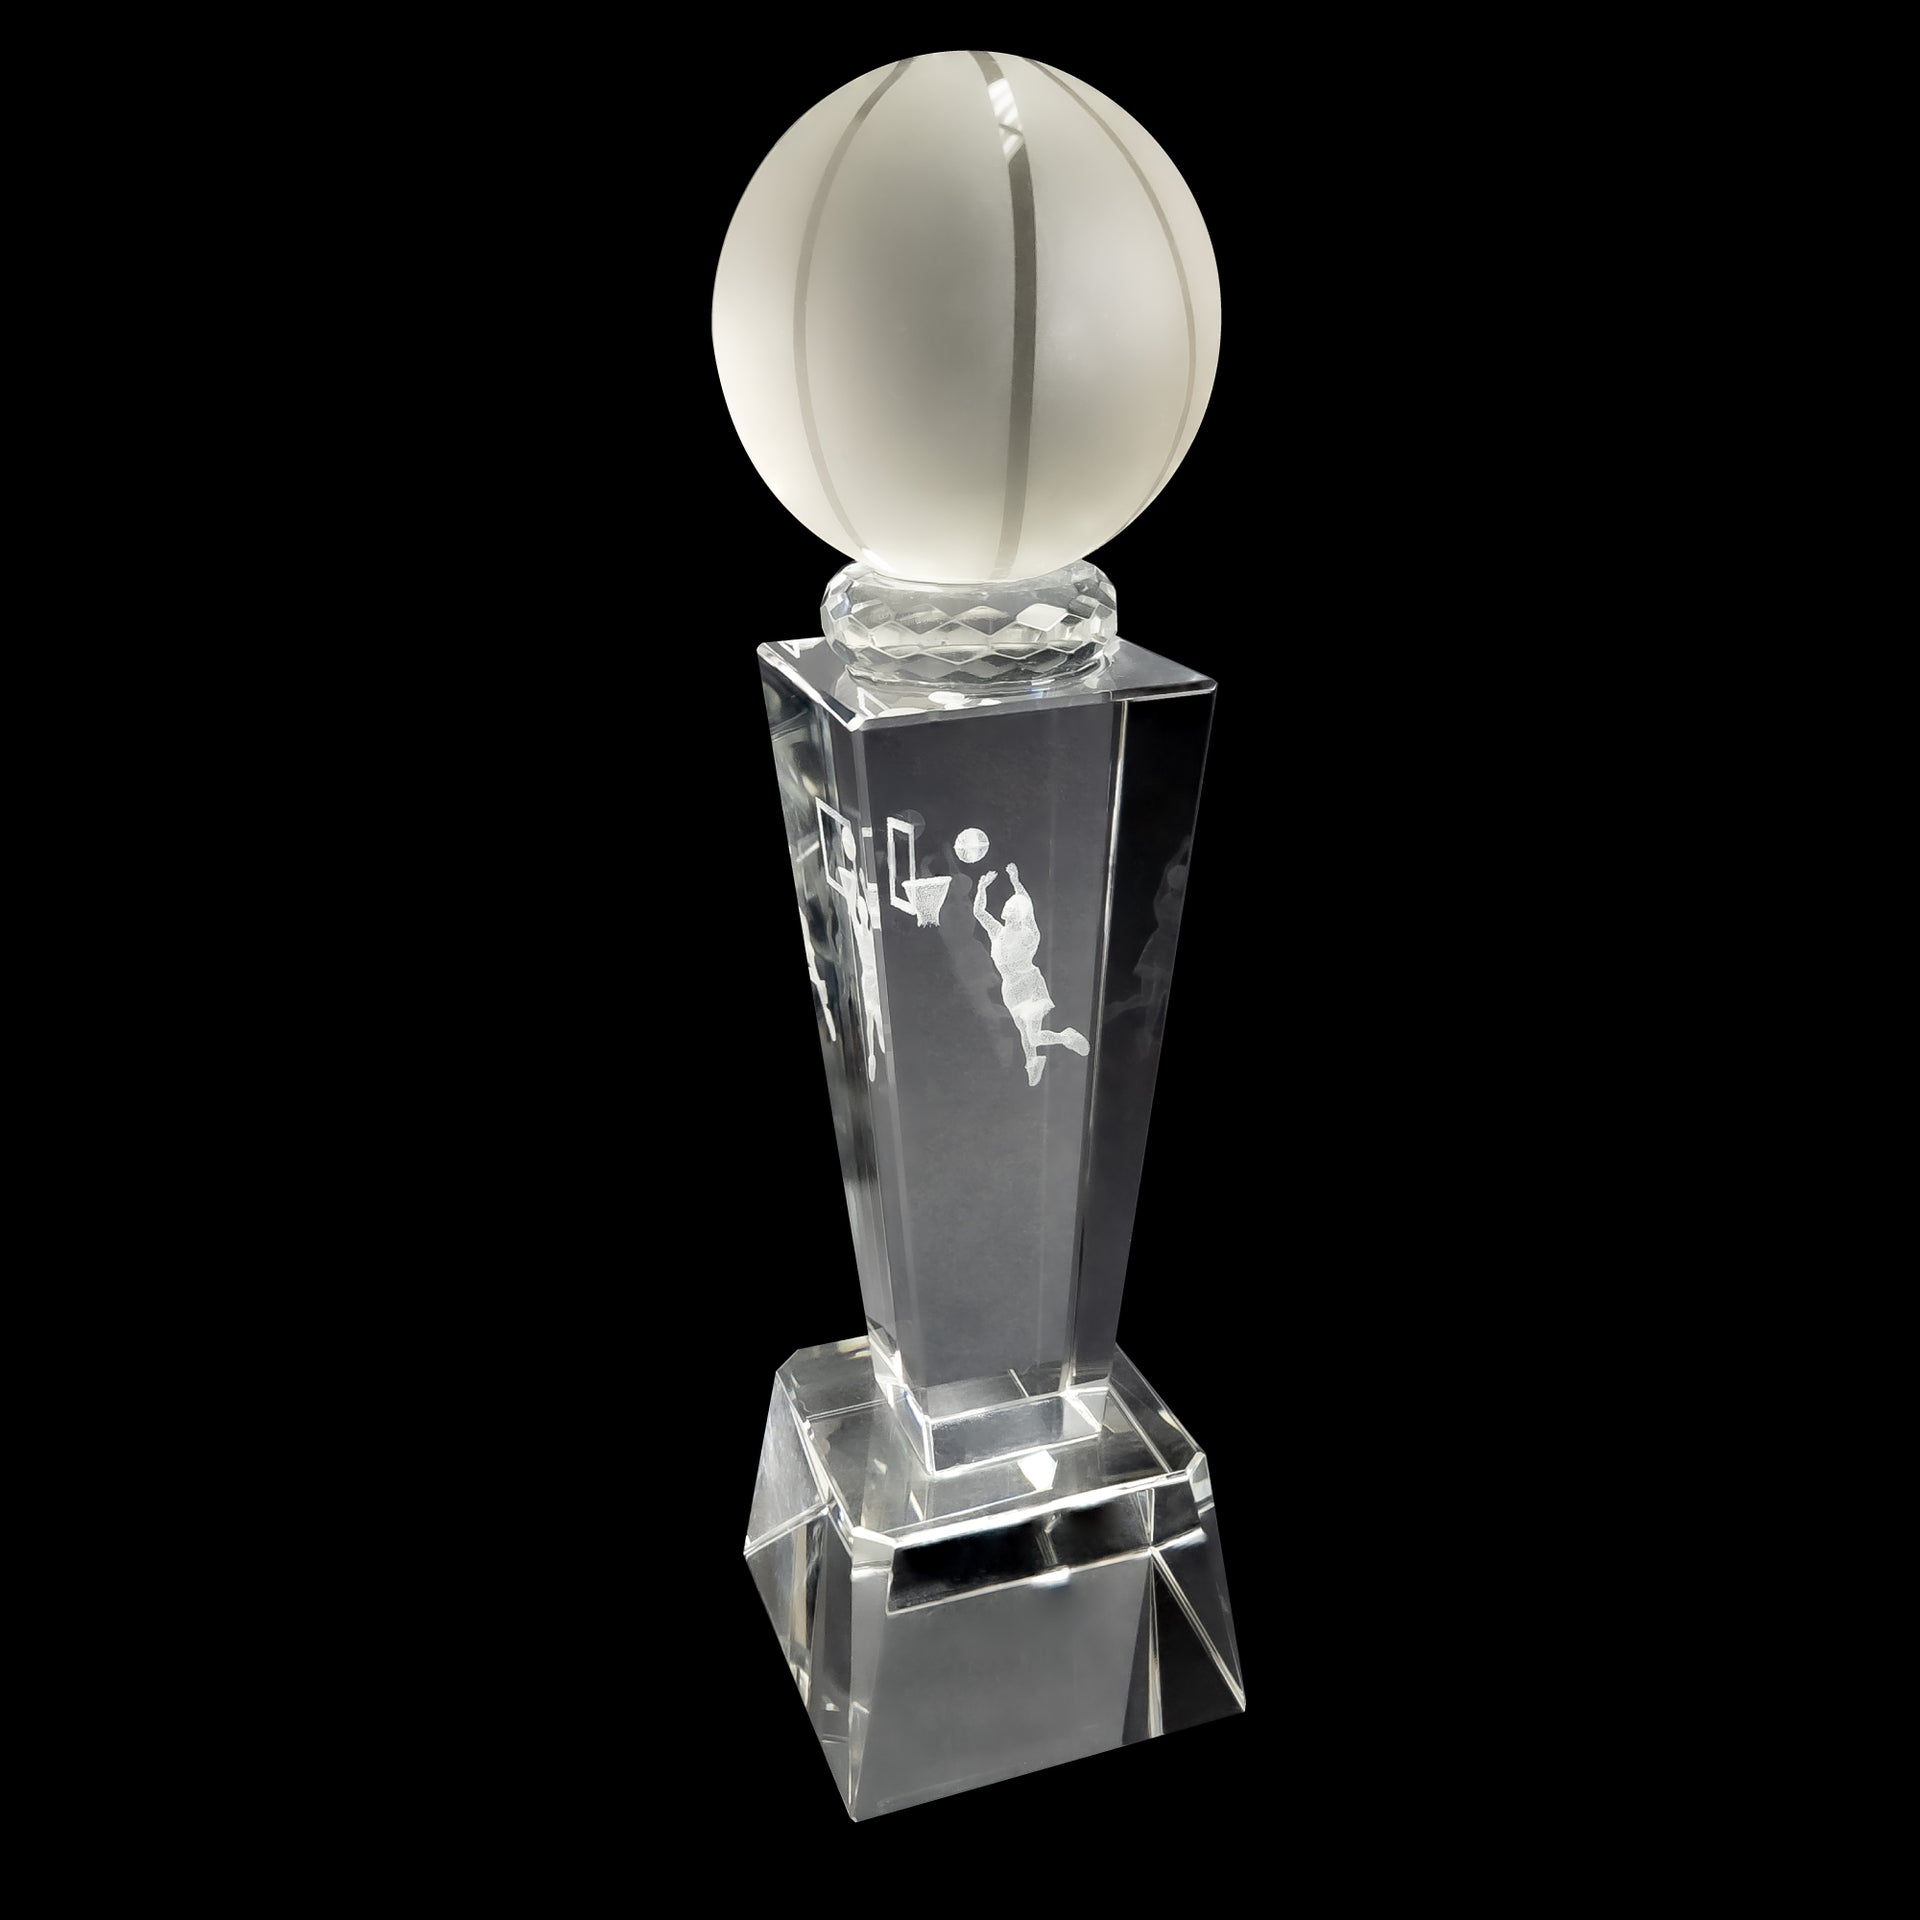 Crystal Basketball Award, Basketball Crystal Award